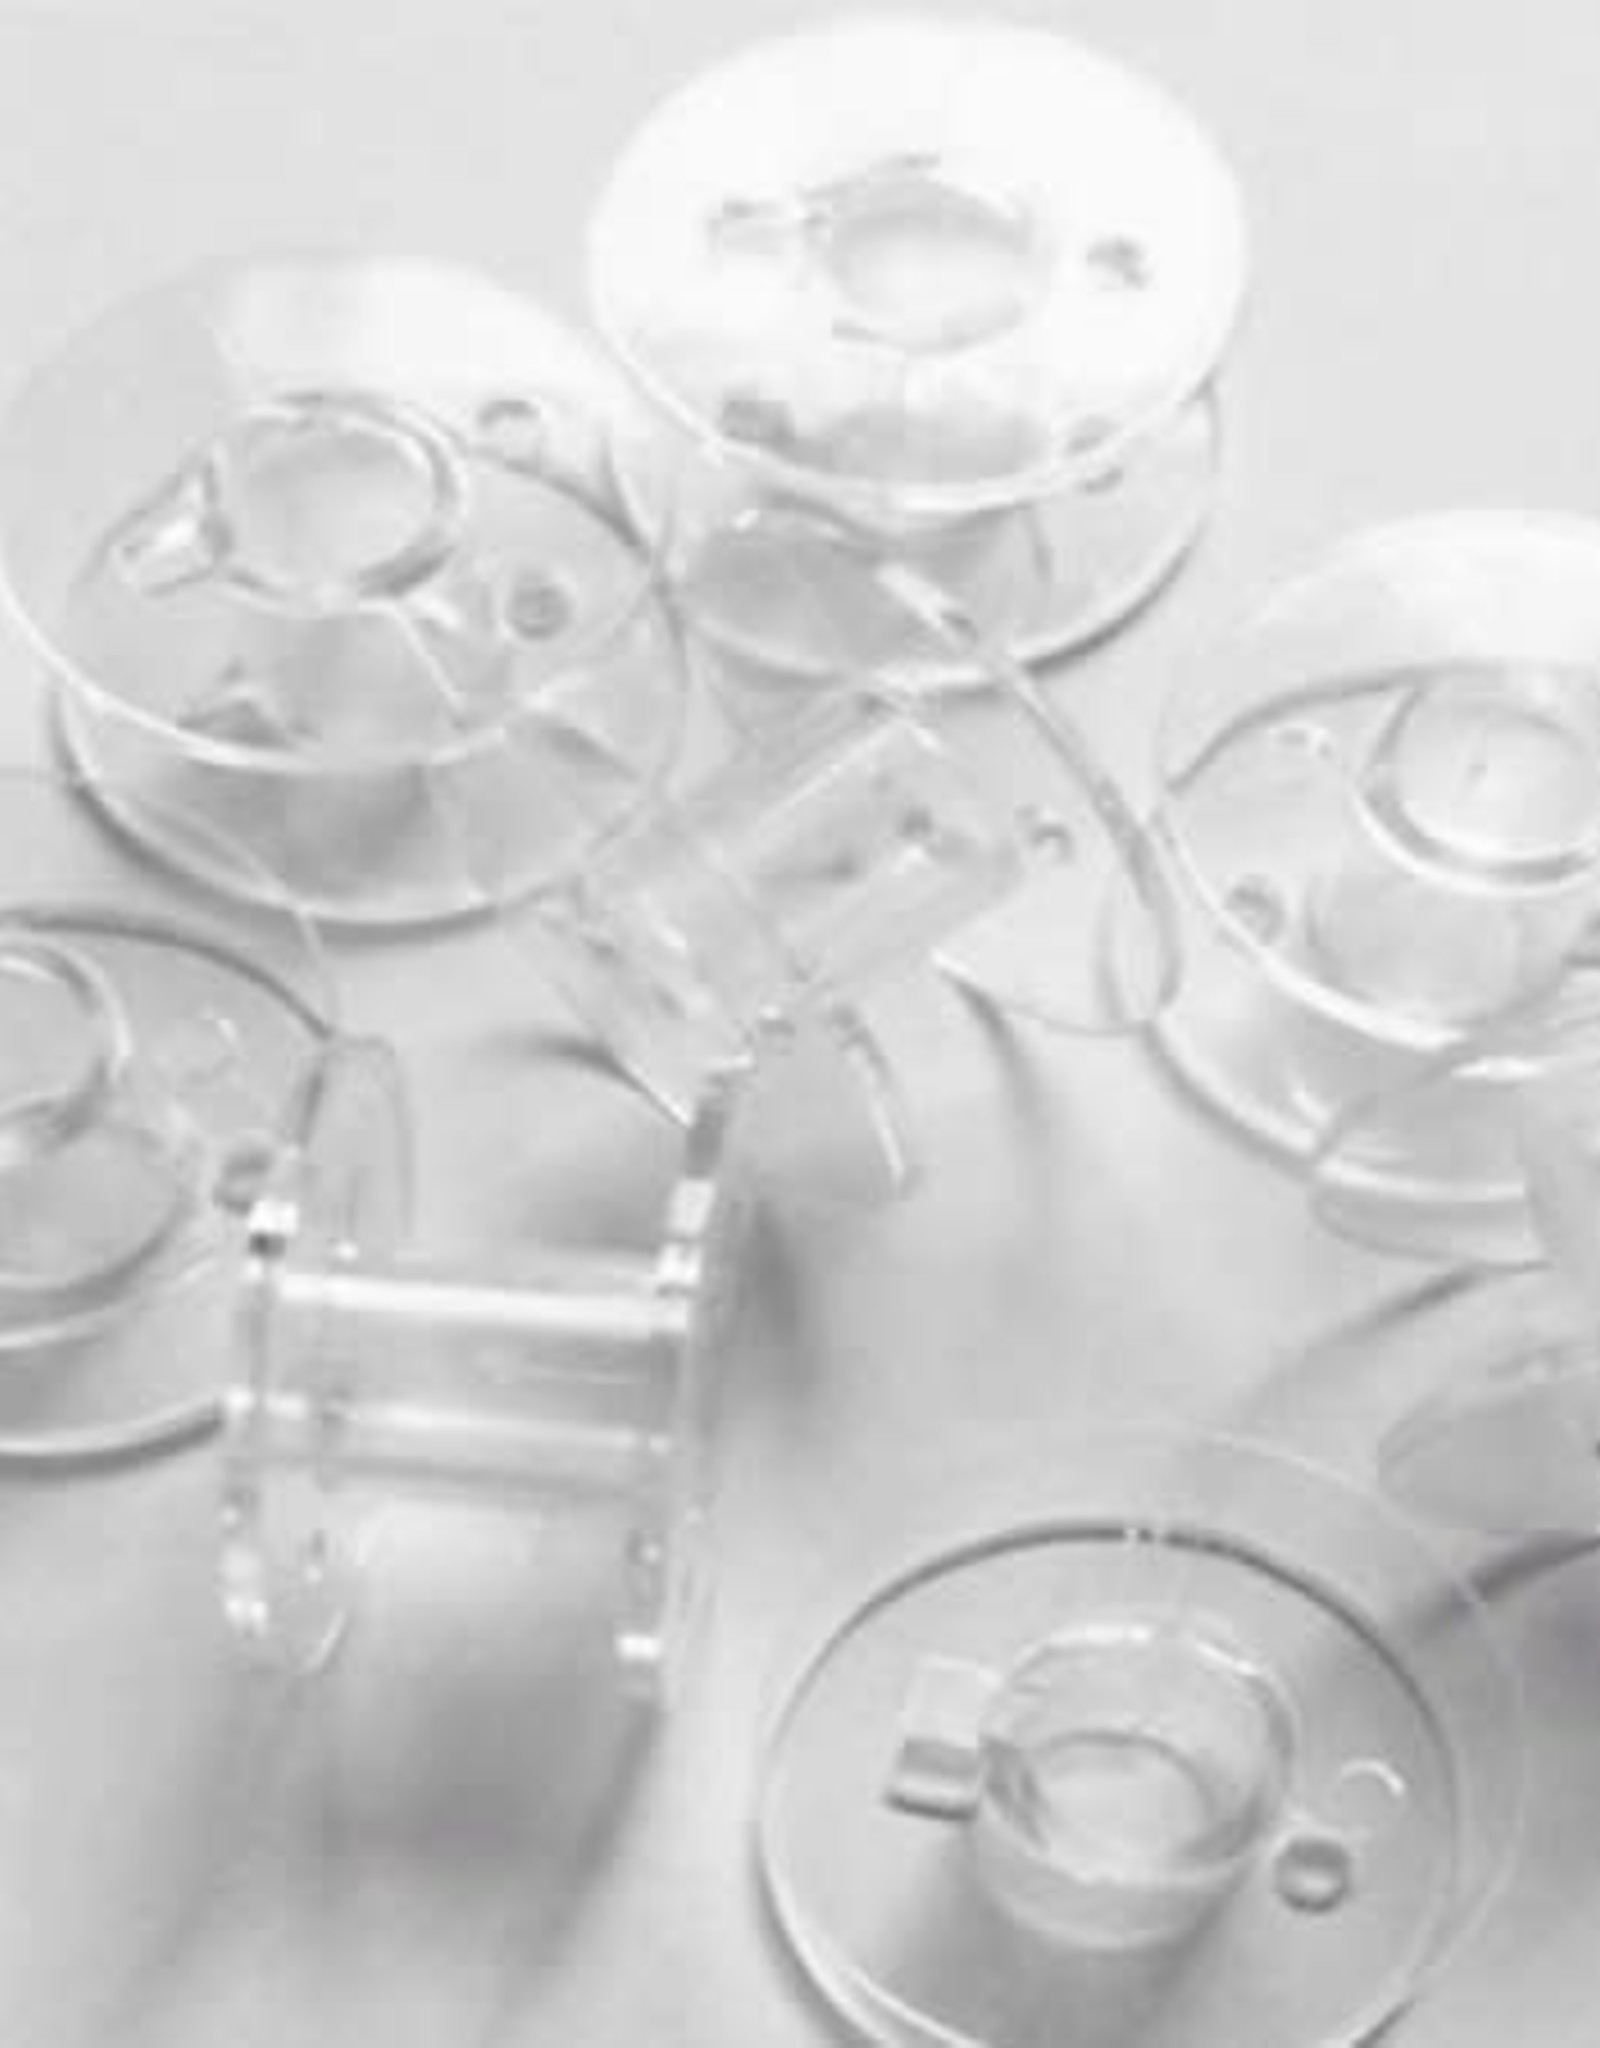 Janome Janome Plastic Bobbins Clear (10 Pack)